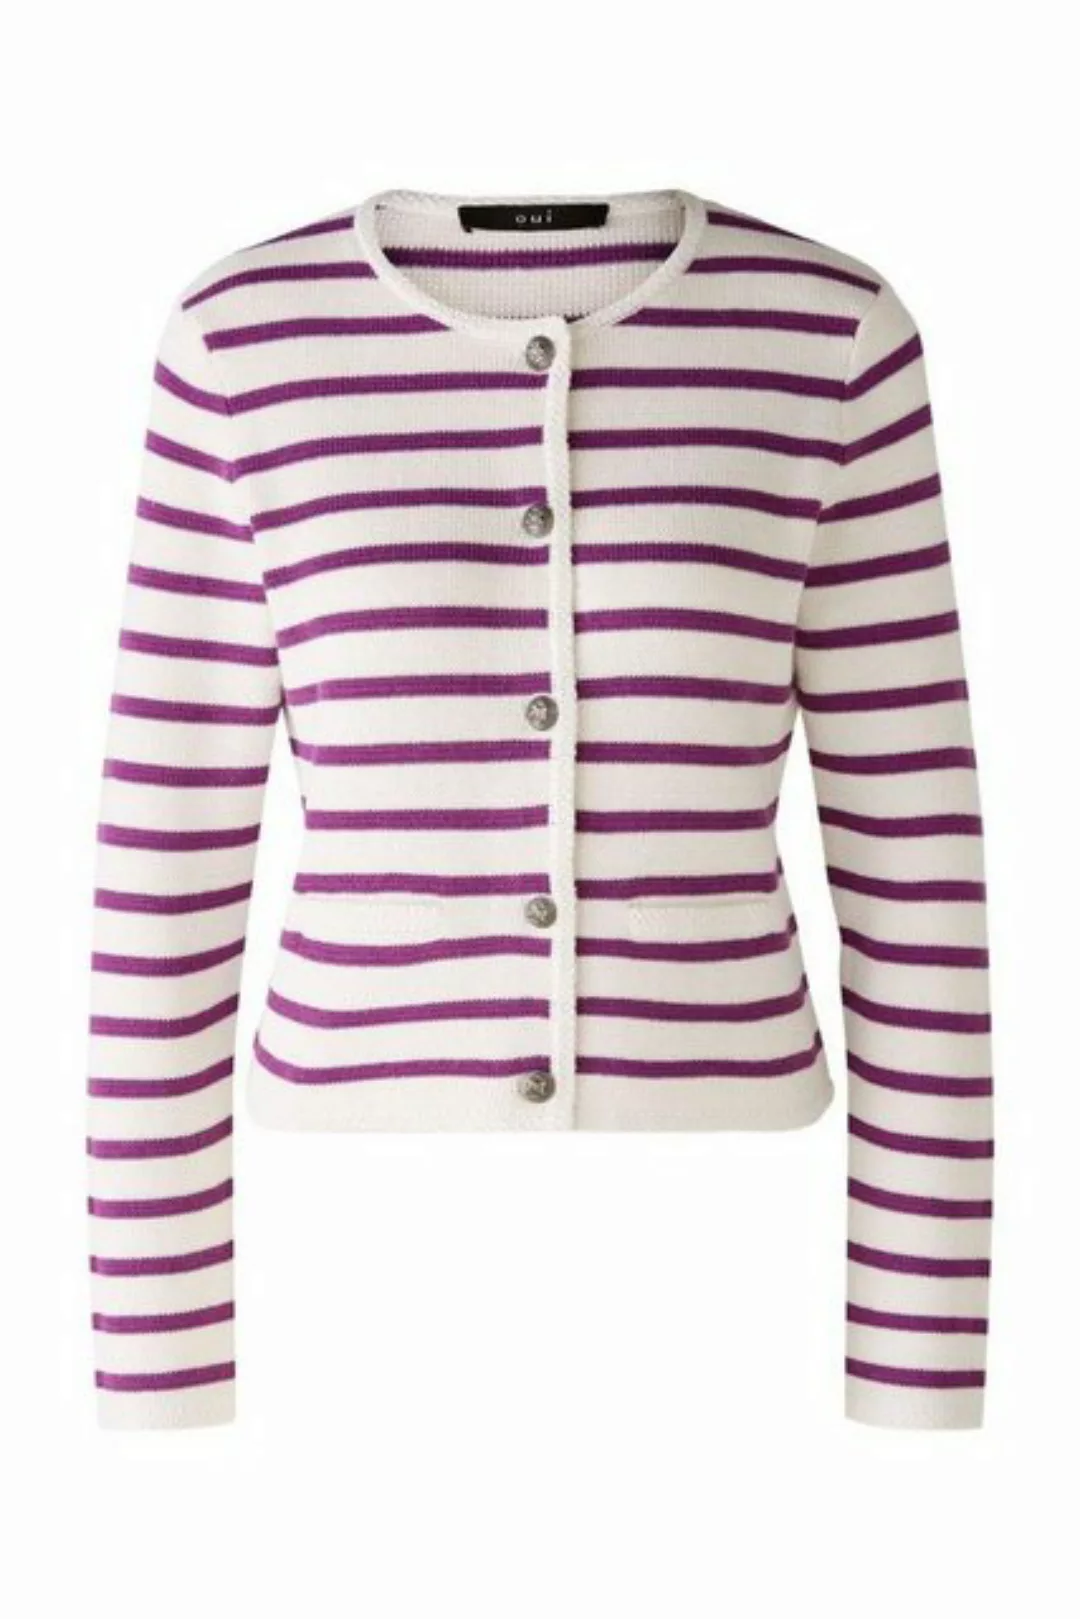 Oui Strickjacke Jacke/Jacket, white violett günstig online kaufen